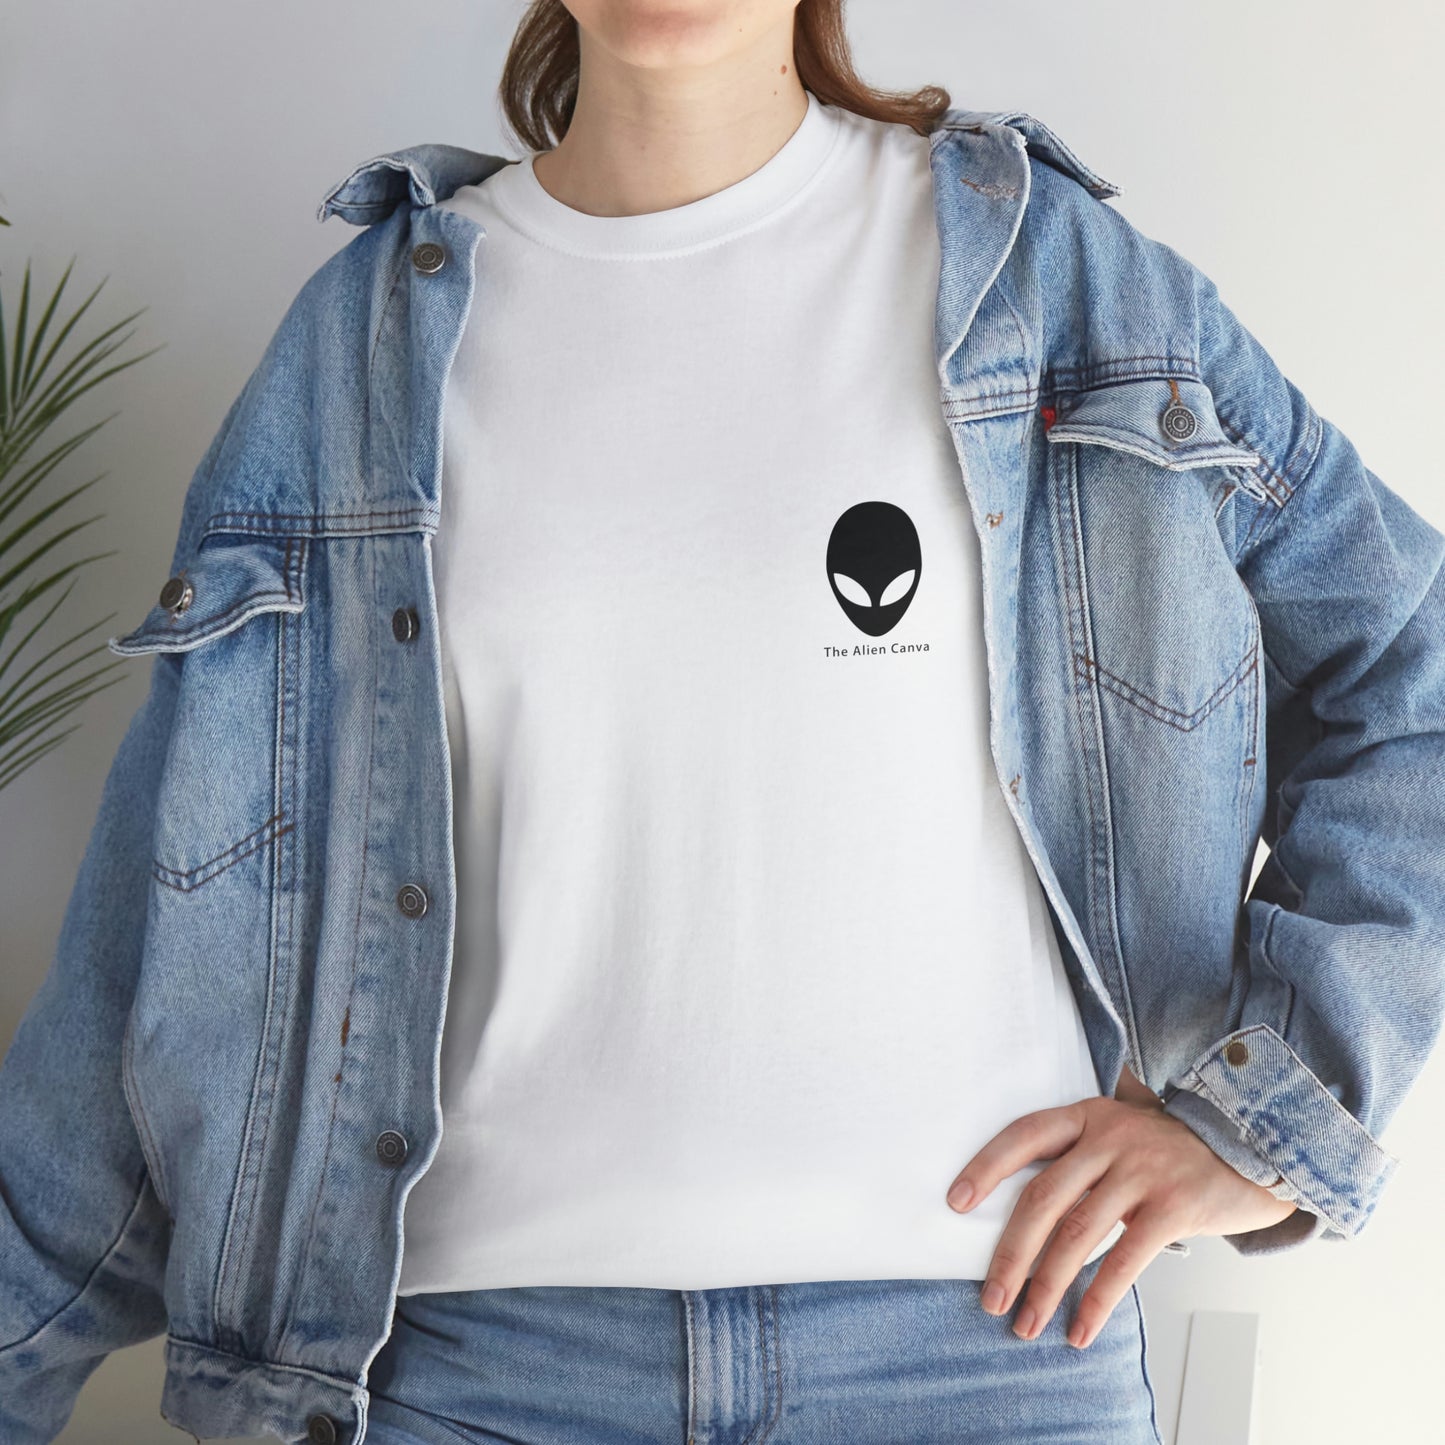 Ins Nichts starren – Das Alien-T-Shirt